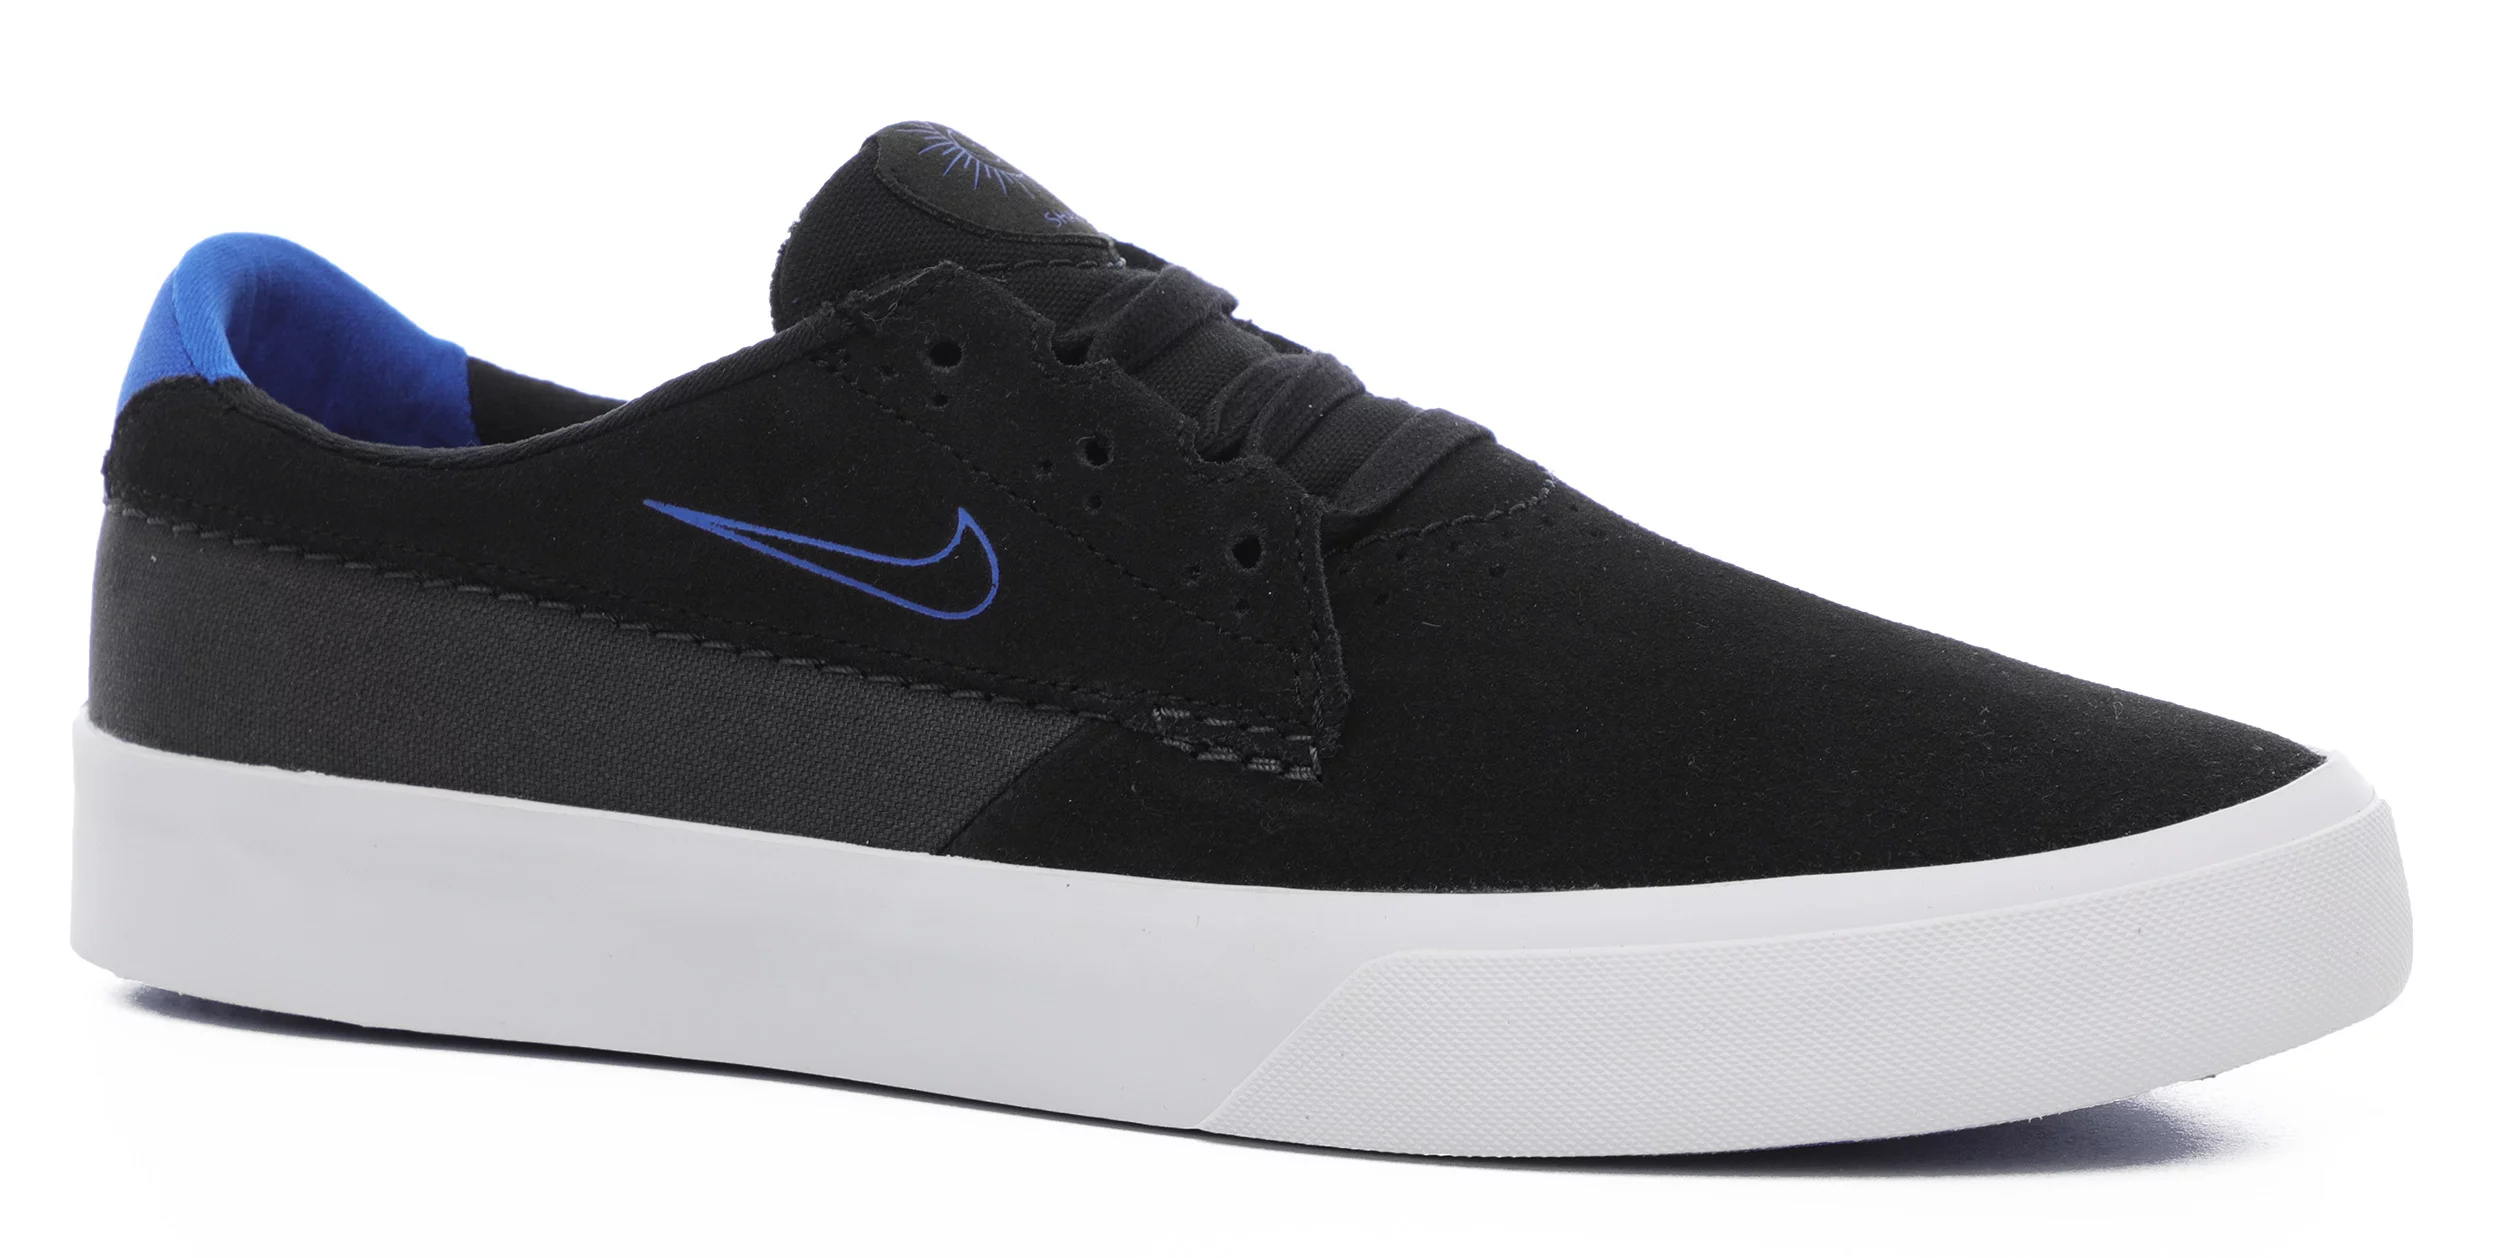 Nike SB Shane Skate Shoes - royal-anthracite-white - Free Shipping |